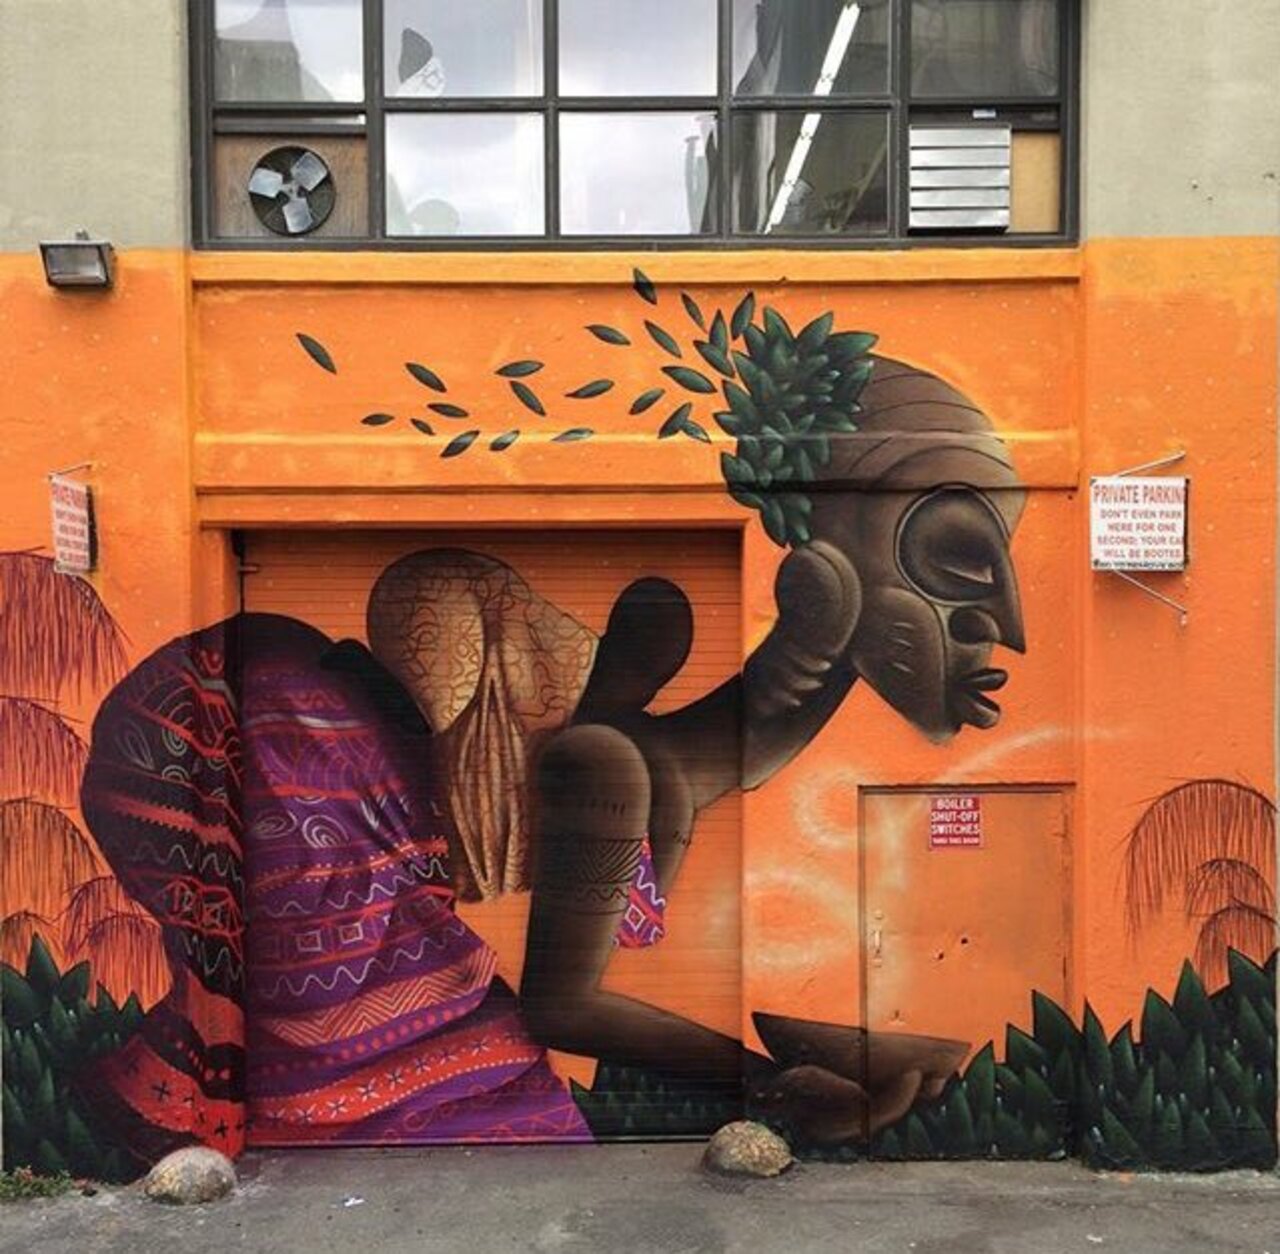 New Street Art by Alexandre Keto in NYC 

#art #graffiti #mural #streetart https://t.co/Cdqwqxklbo